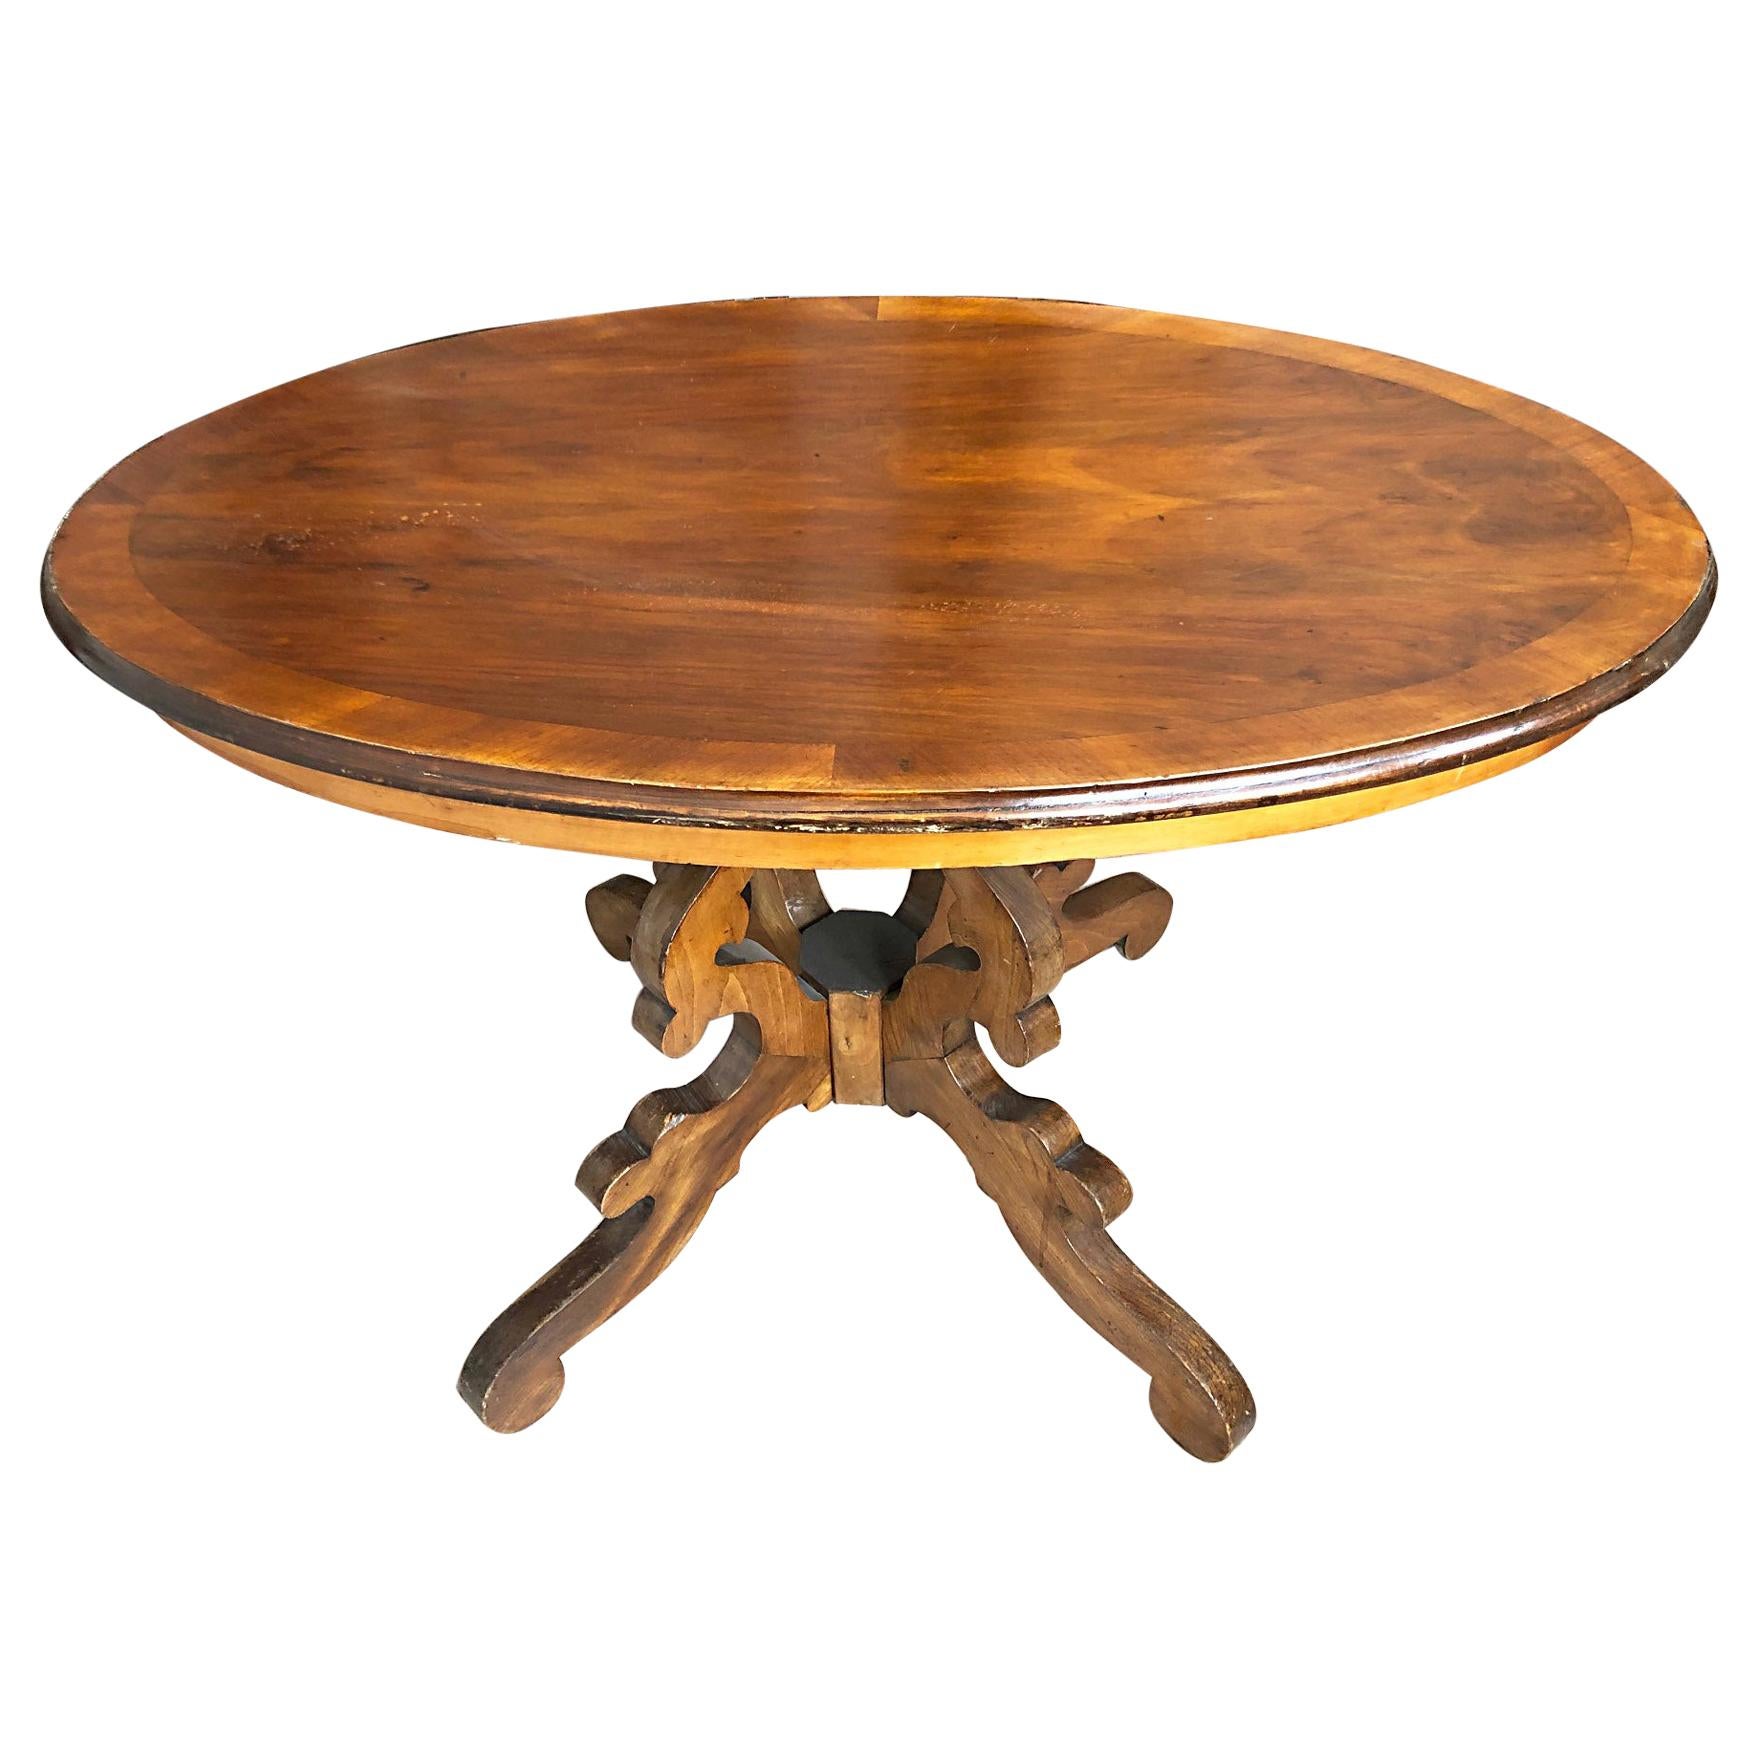 Oval Table in Walnut, from 1900, Original Tuscan Veneered Top, Solid Wood Legs